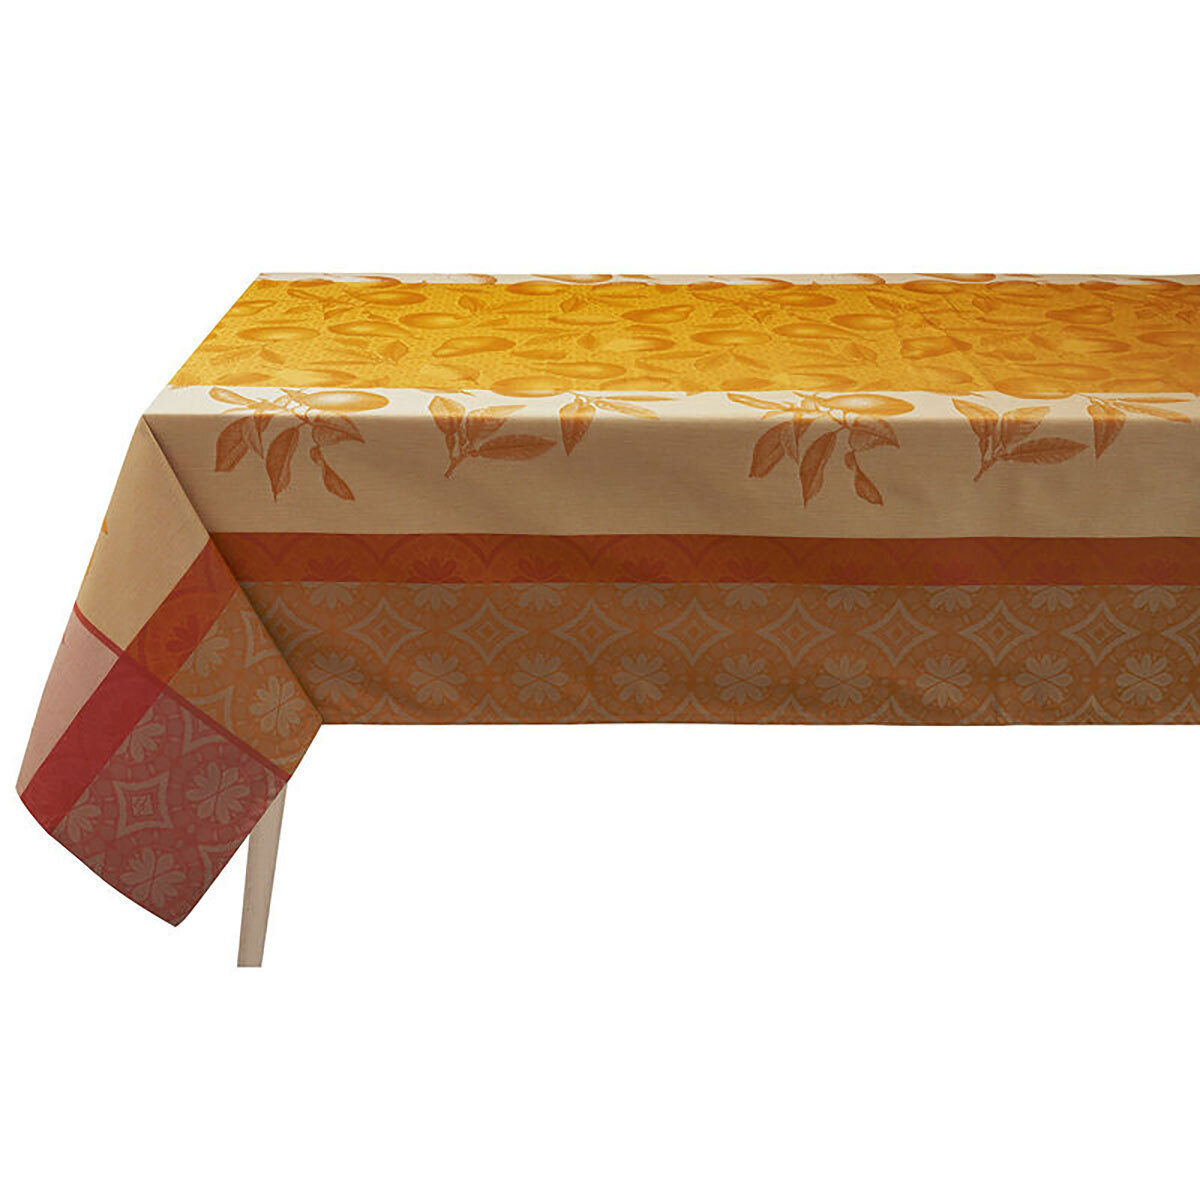 Le Jacquard Francais Arriere-Pays Orange Coated Tablecloth 69 x 126 Inch 27411